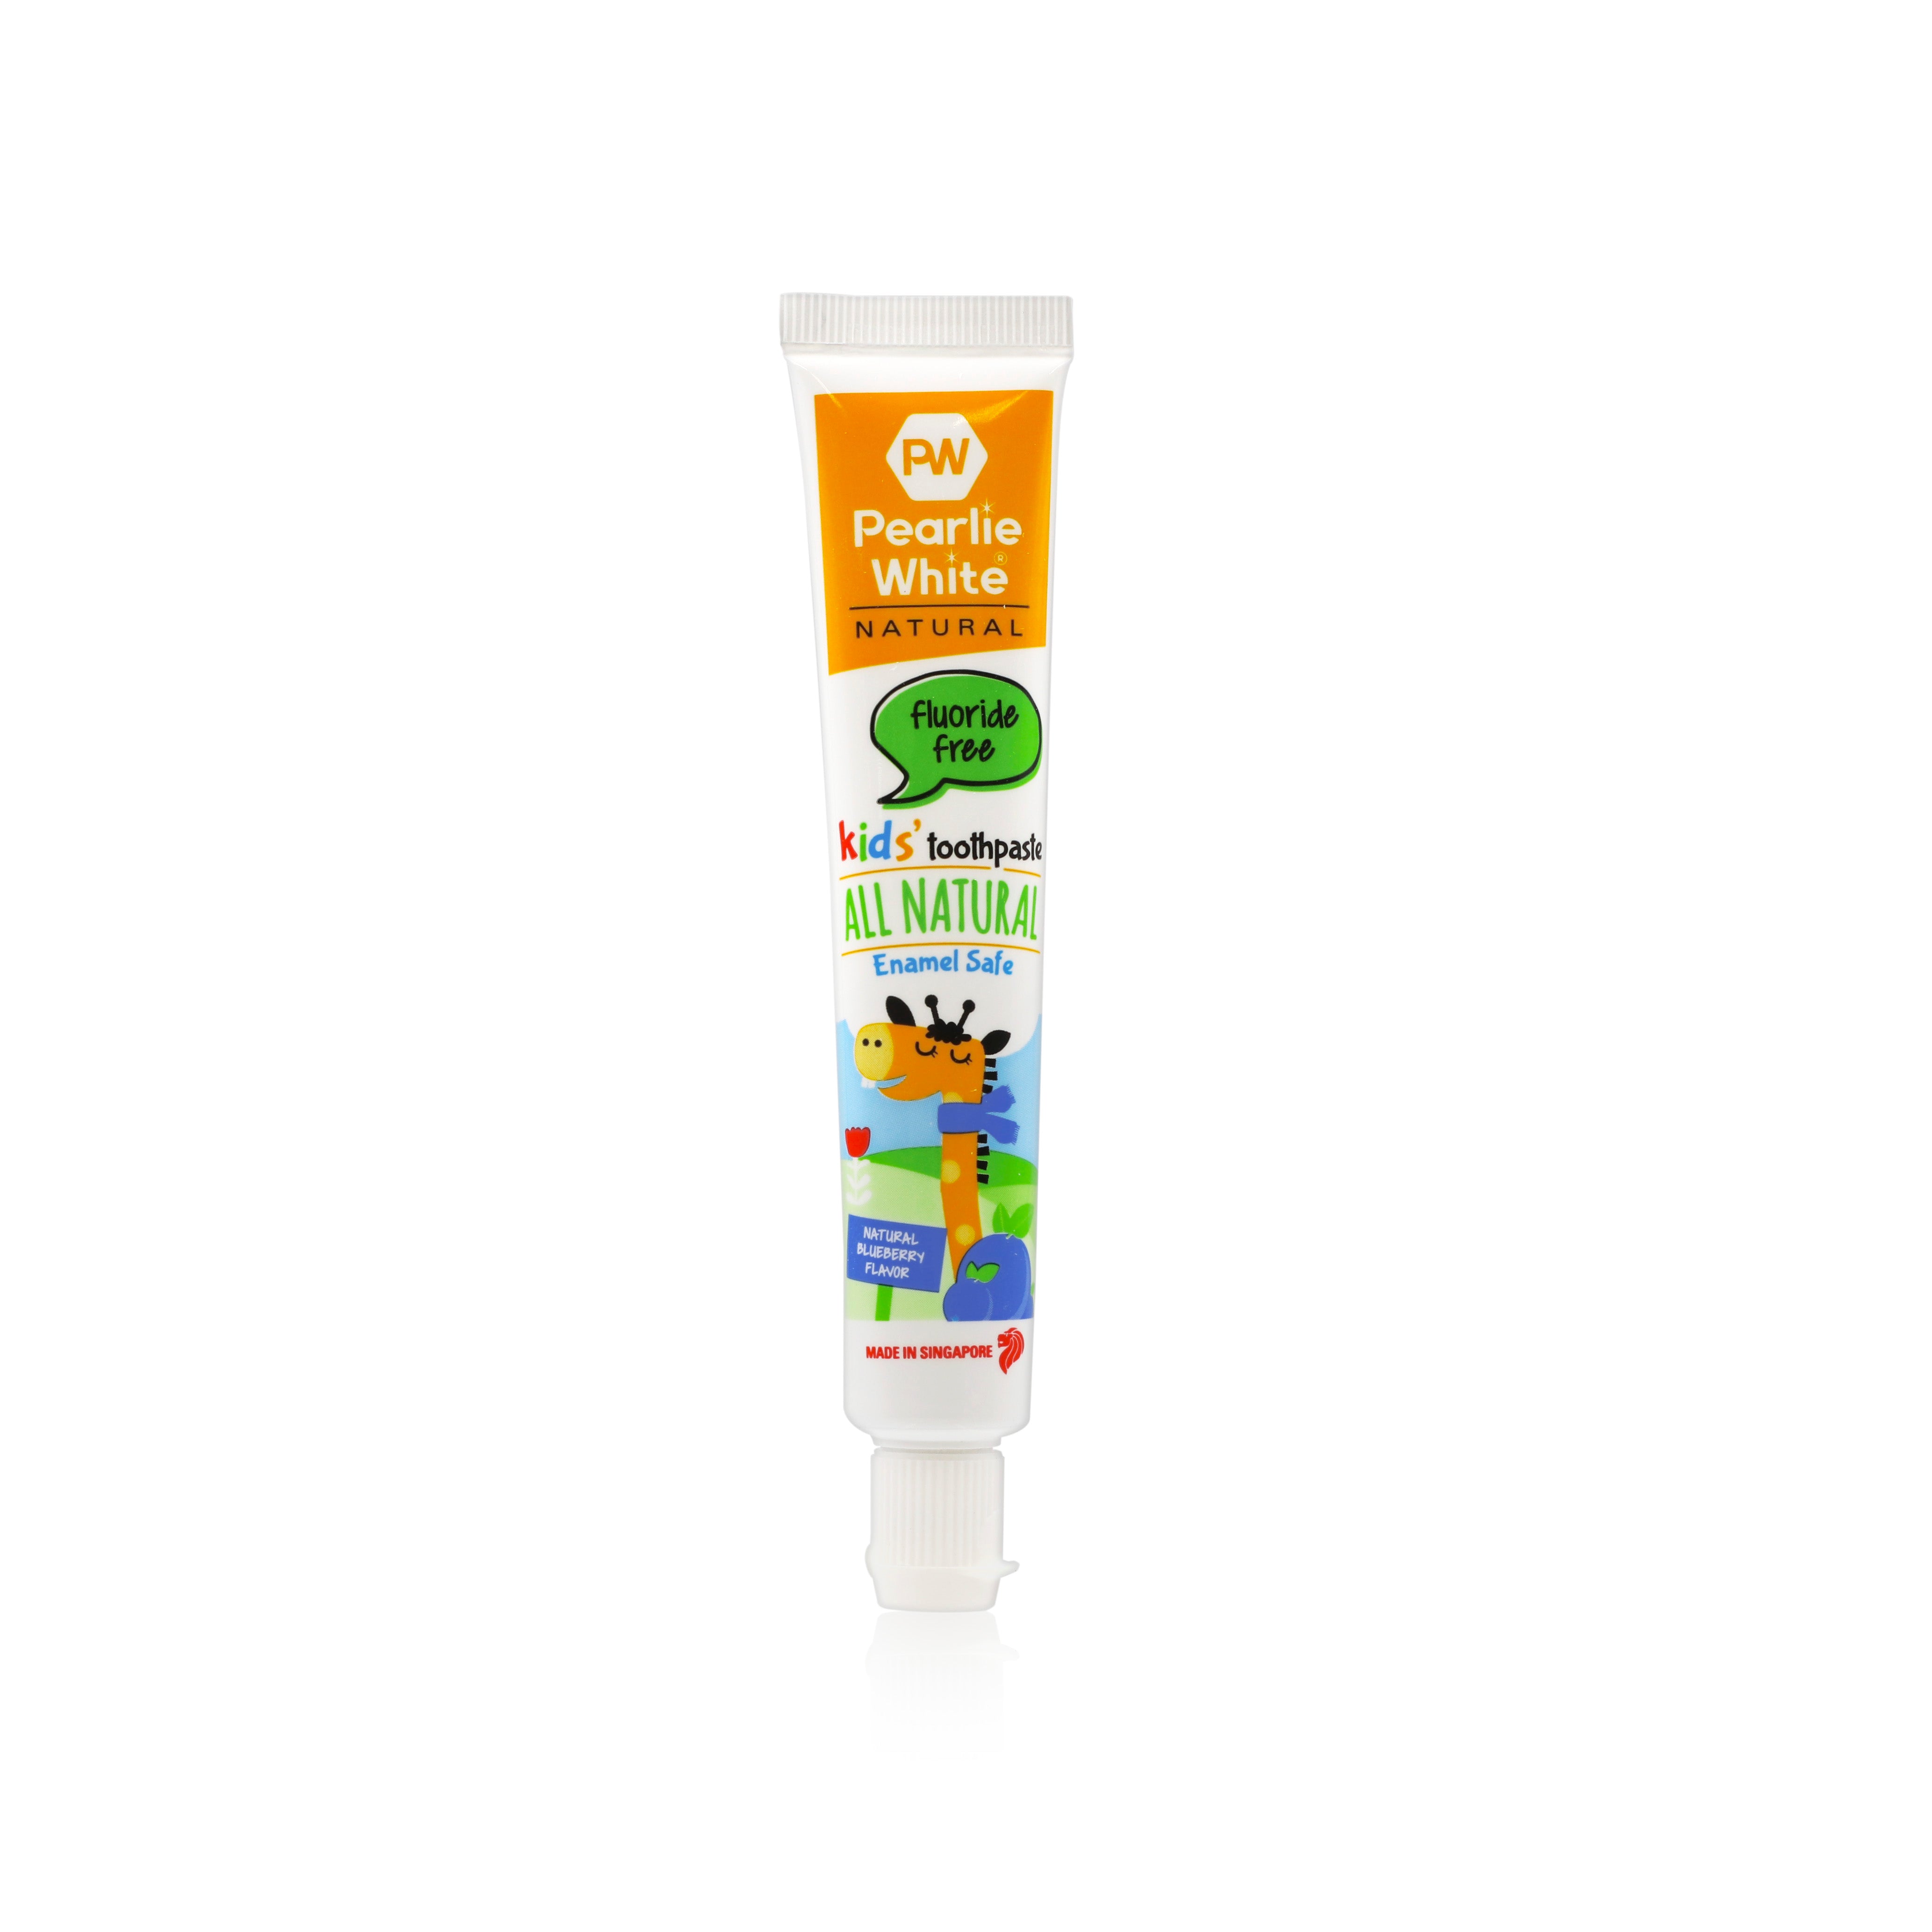 All Natural Enamel Safe Kids’ Toothpaste (Blueberry) 45g